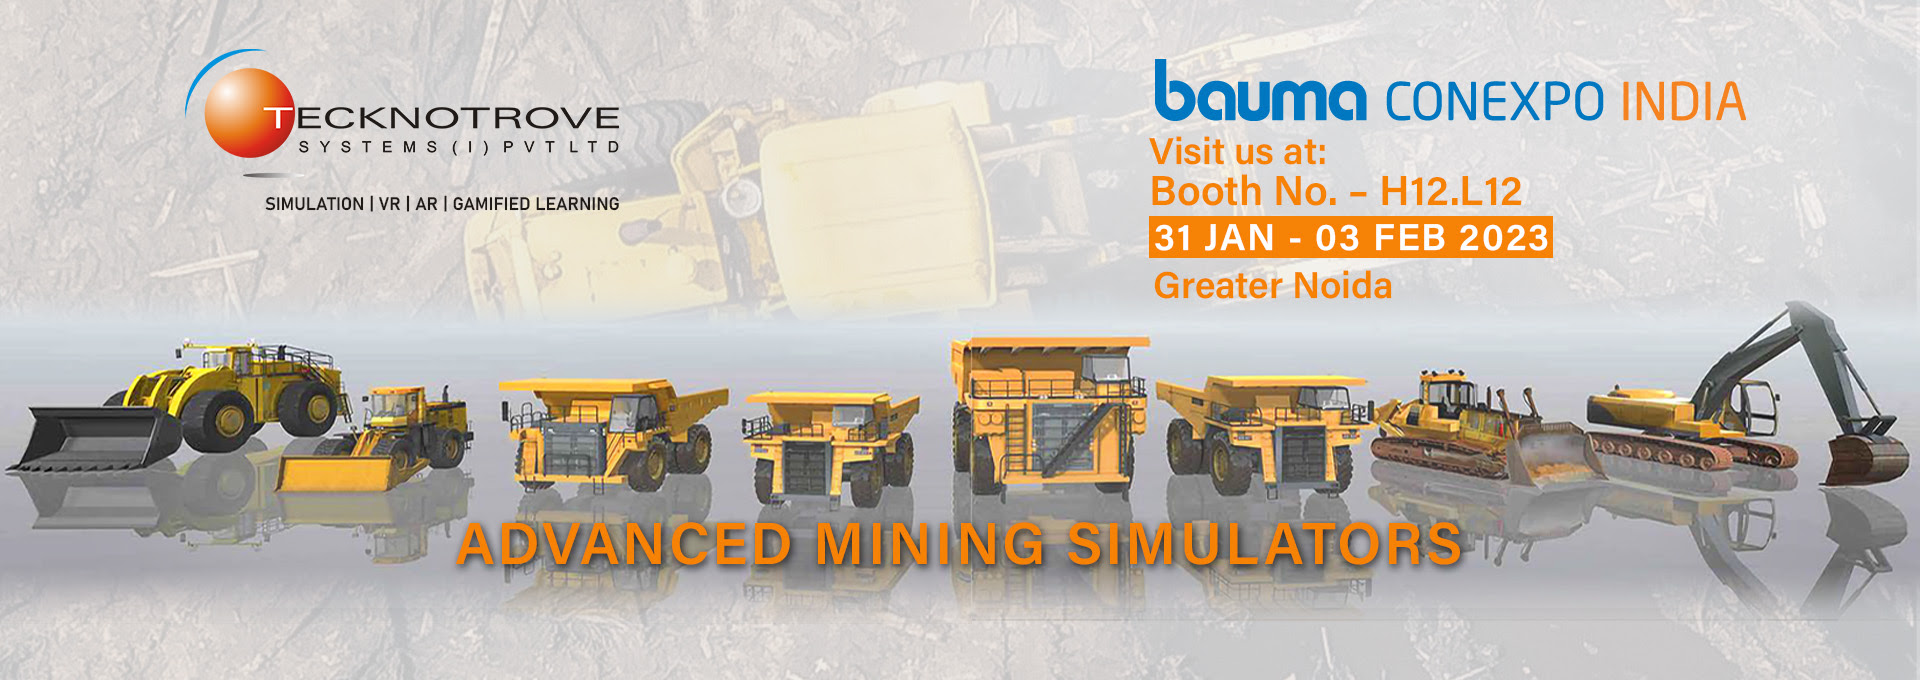 Advanced Mining Simulator - Bauma Conexpo India - Booth No H12.L12, 31st Jan - 3 Feb 2023, Greater Noida 